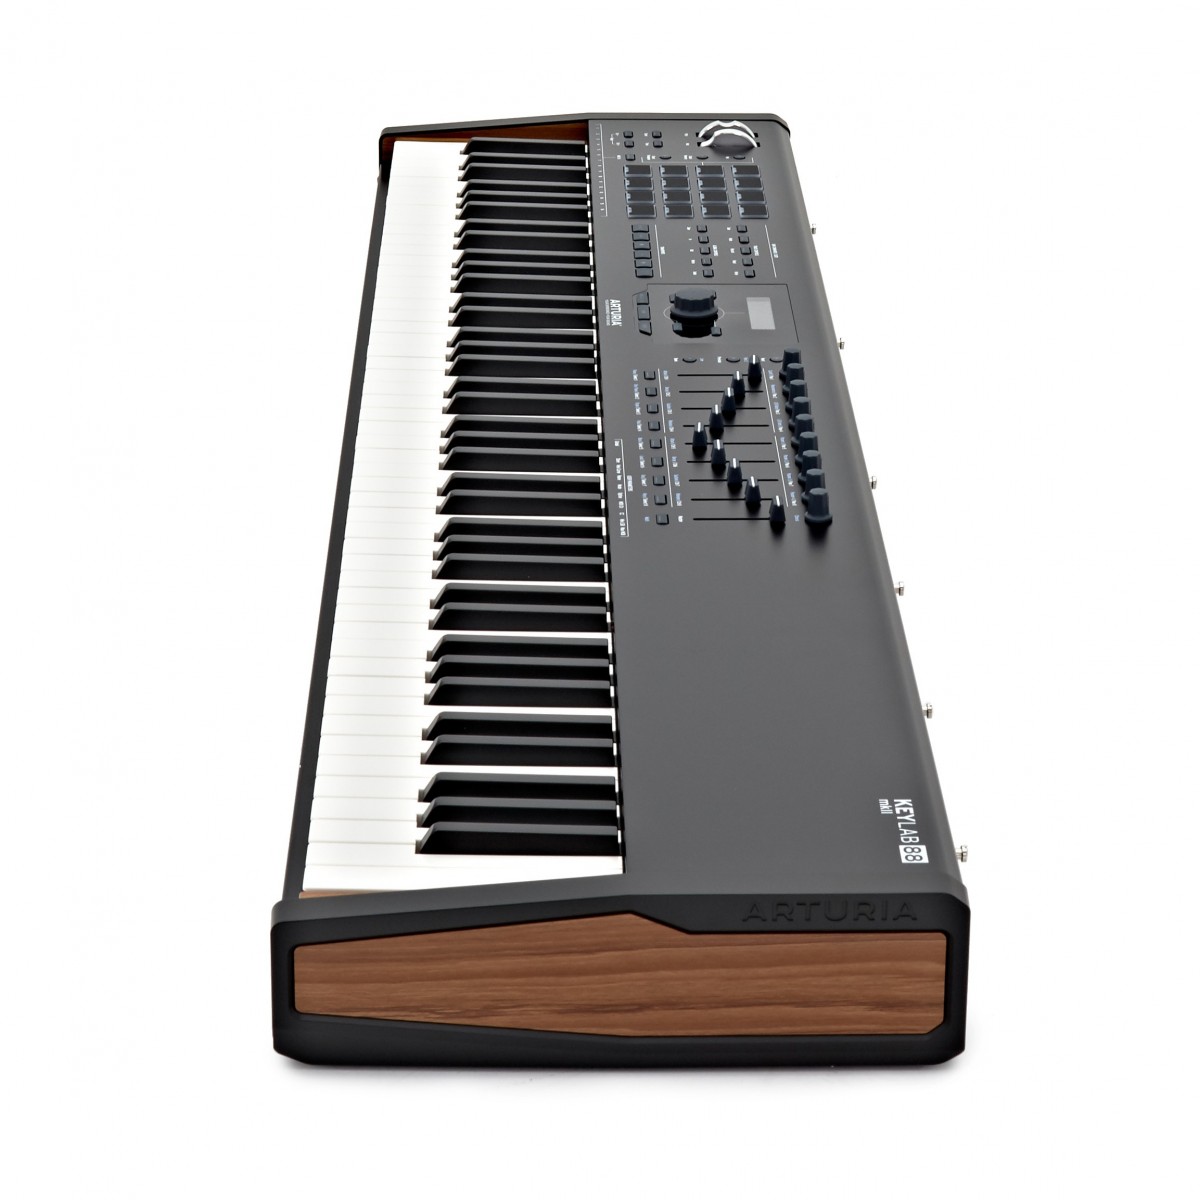 MIDI клавиатура Arturia KeyLab 88 MKII Black Edition